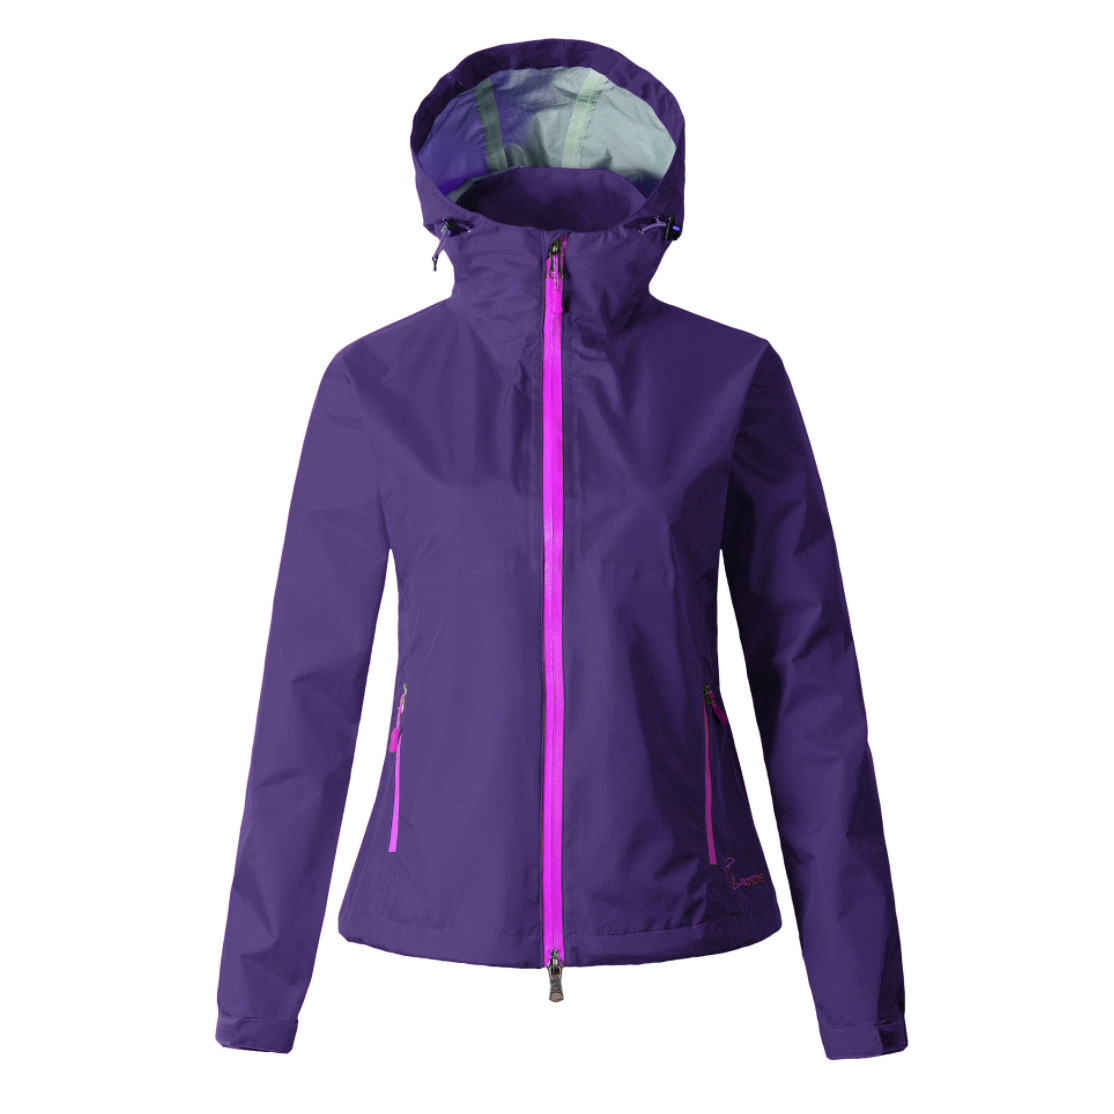 Quality Waterproof Lightweight Windbreaker Jacket Outdoor Running Women'S Sport Coat for sale